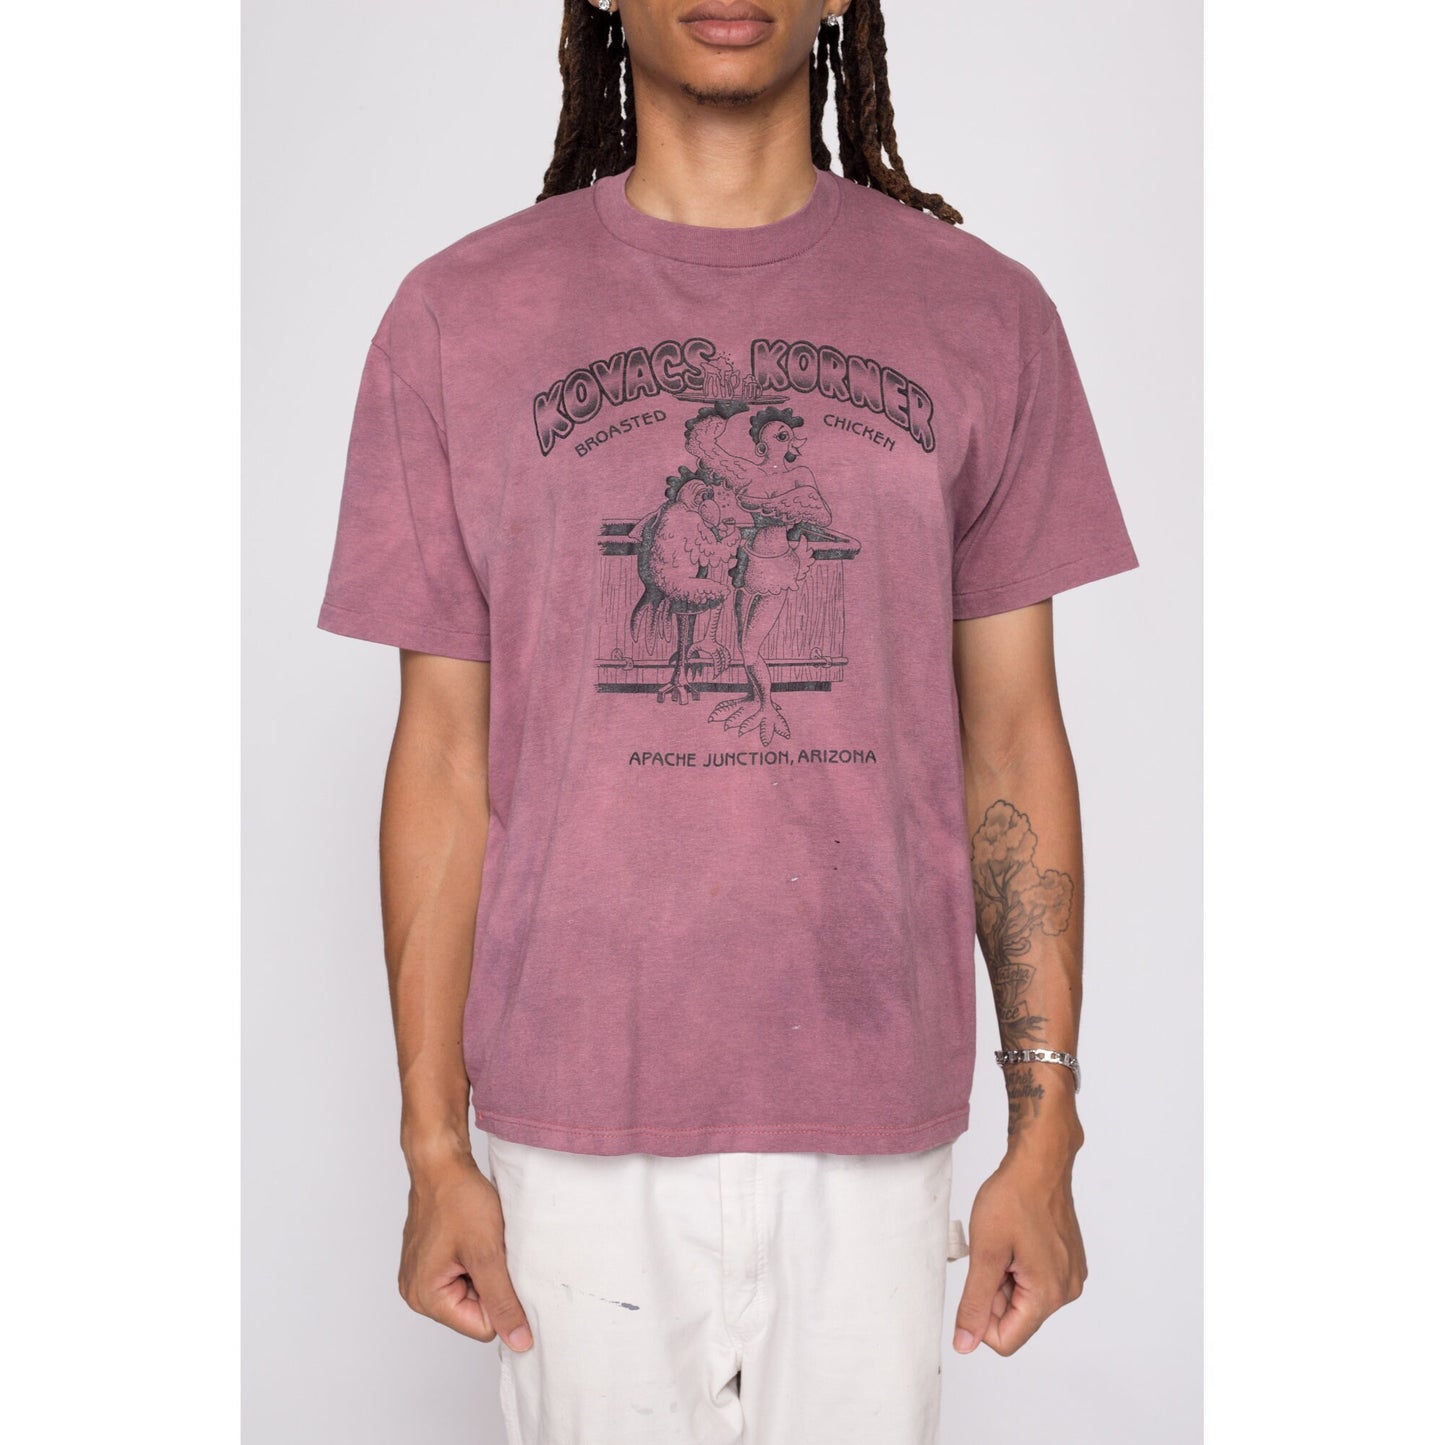 90s "Best Piece In Town" Kovacs Korner Sexy Chicken T Shirt - Men's Large | Vintage Apache Junction Arizona Purple Tie Dye Graphic Tee